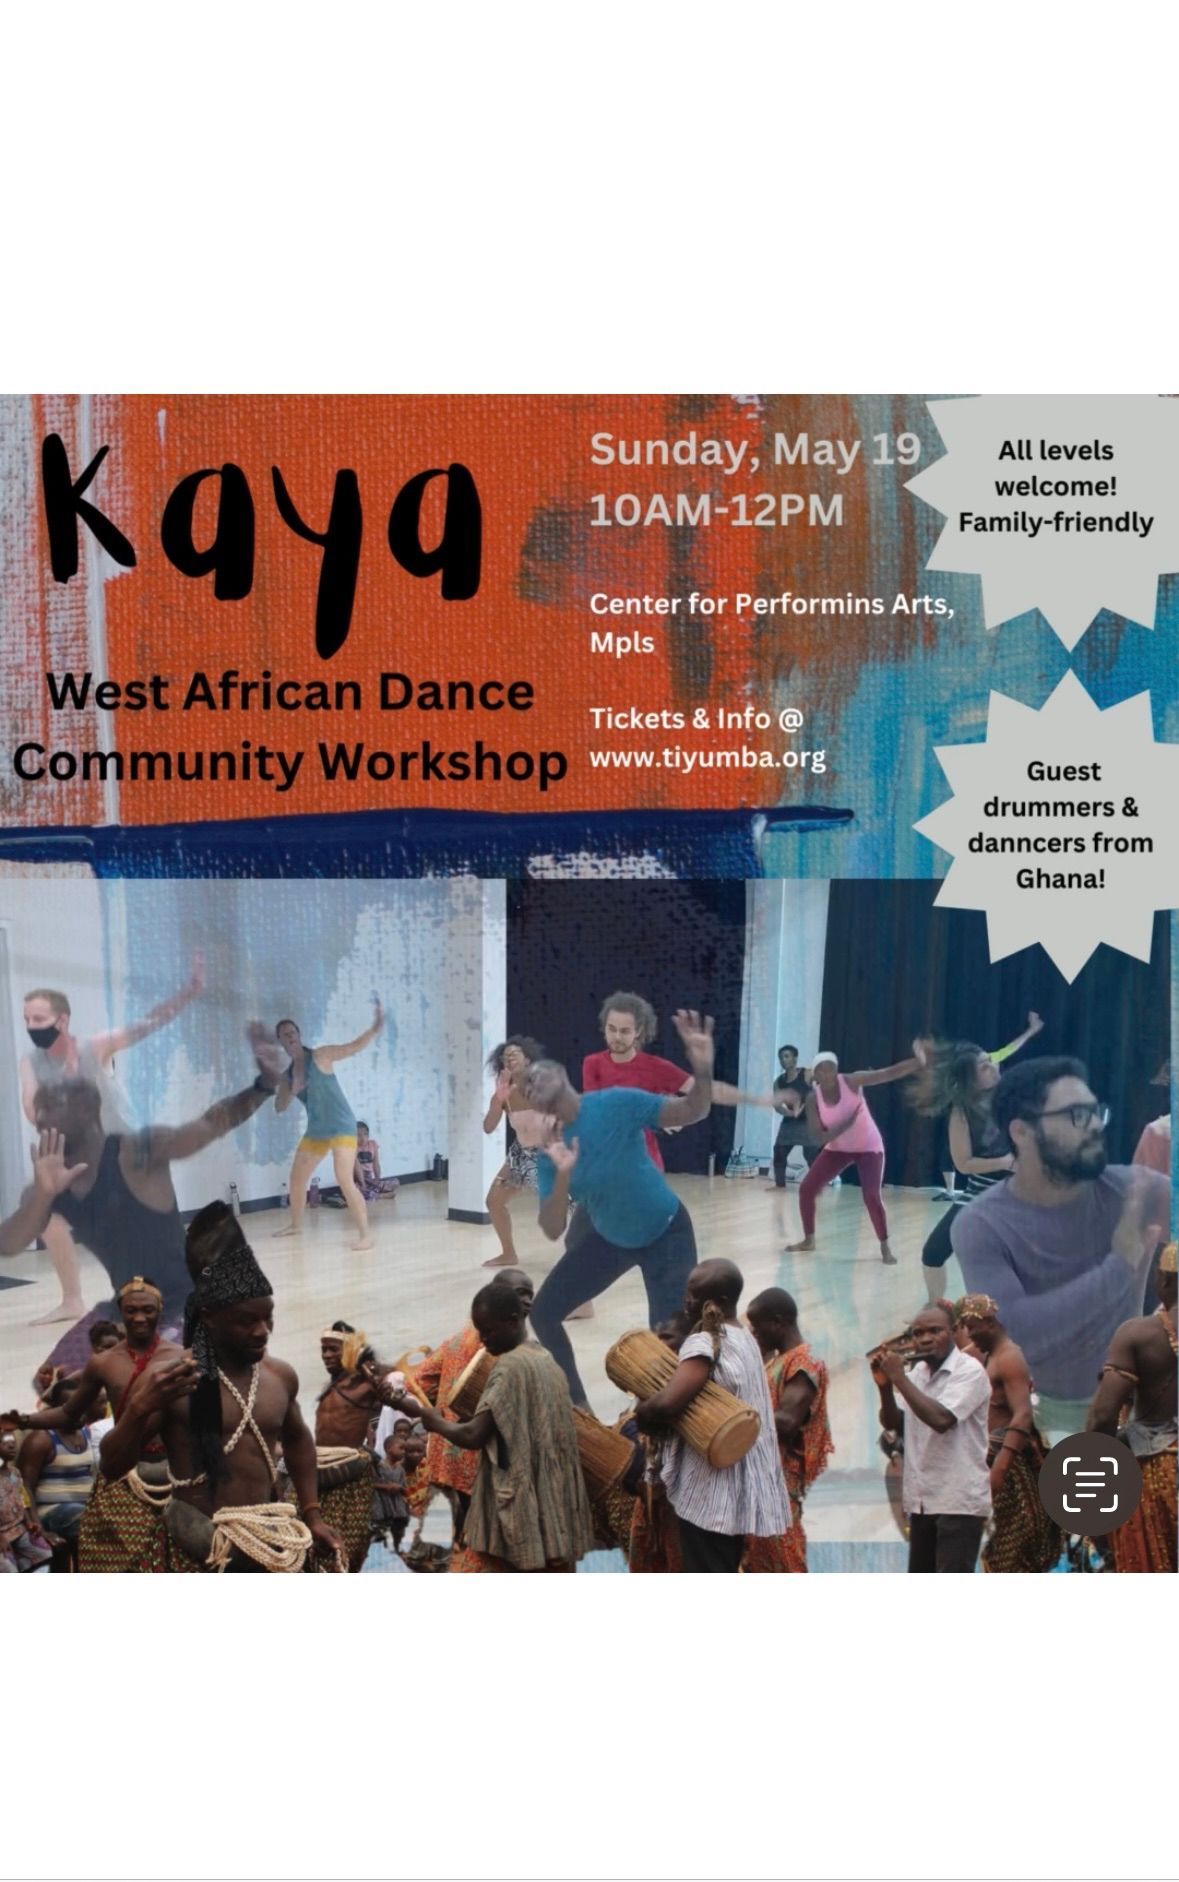 Kaya West African Dance Community Workshop